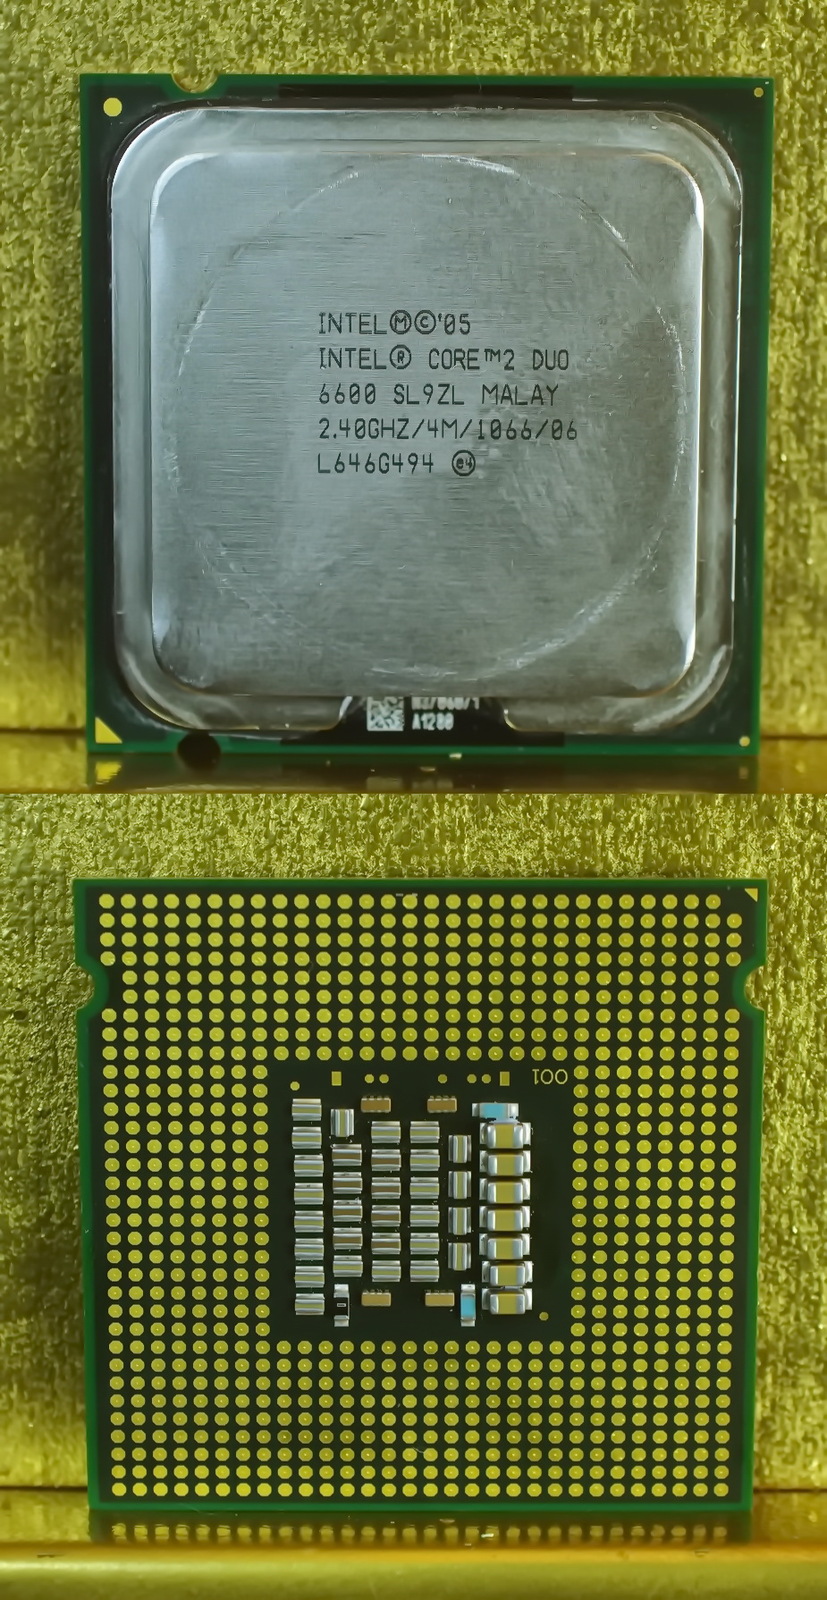 Intel Core 2 Duo E6600 Dual-Core CPU 2.4 GHz 1066MHz LGA775 SL9ZL - $8.99